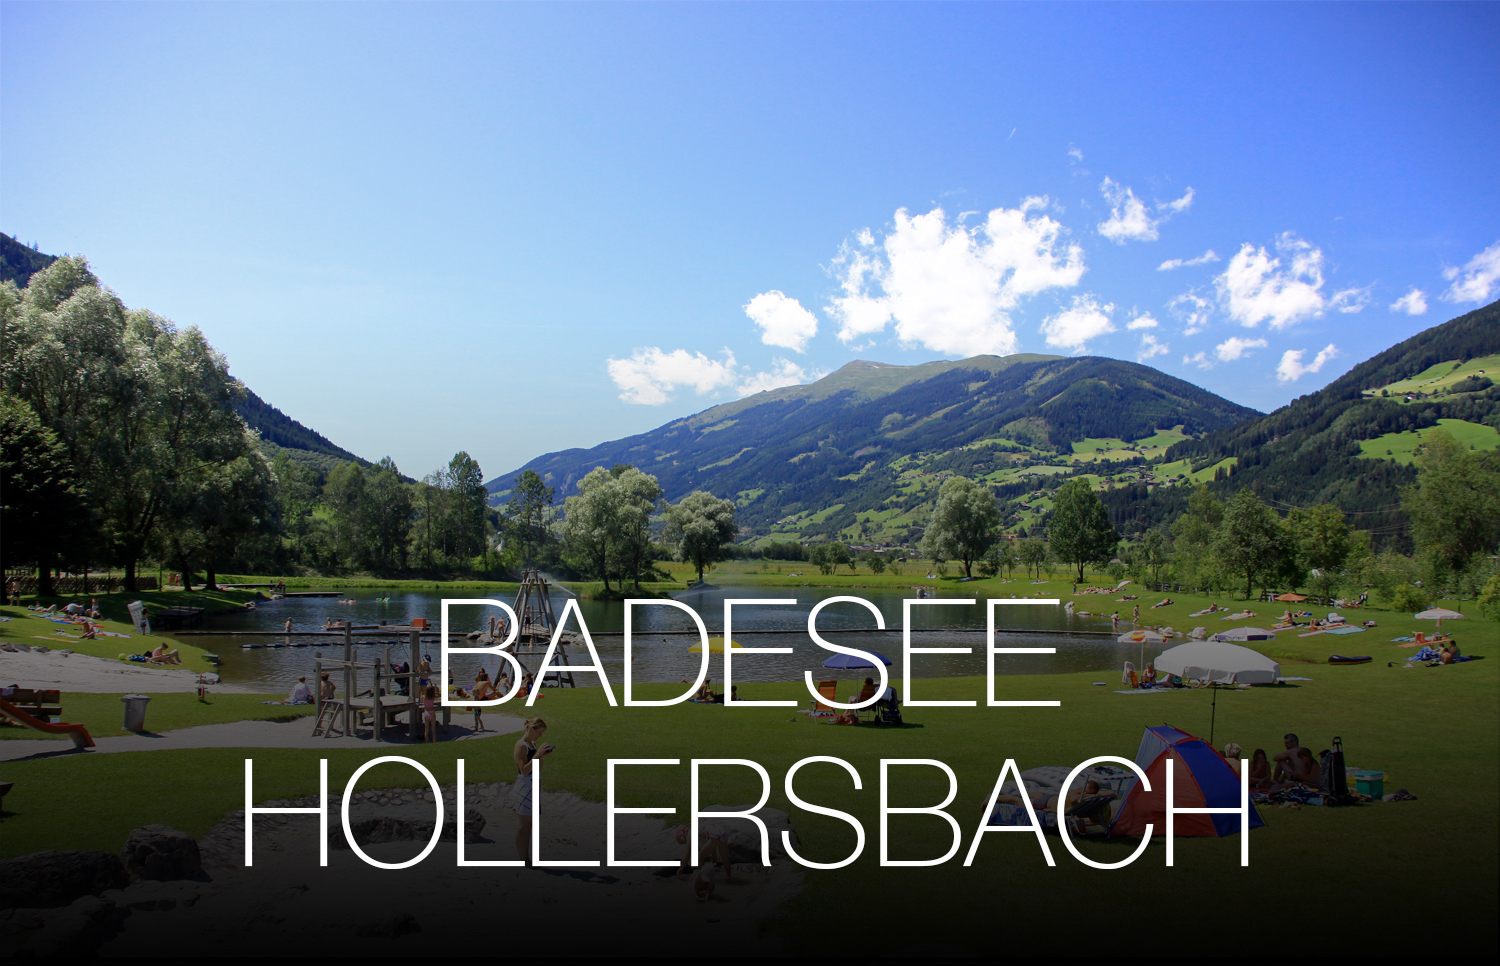 Badesee Hollersbach